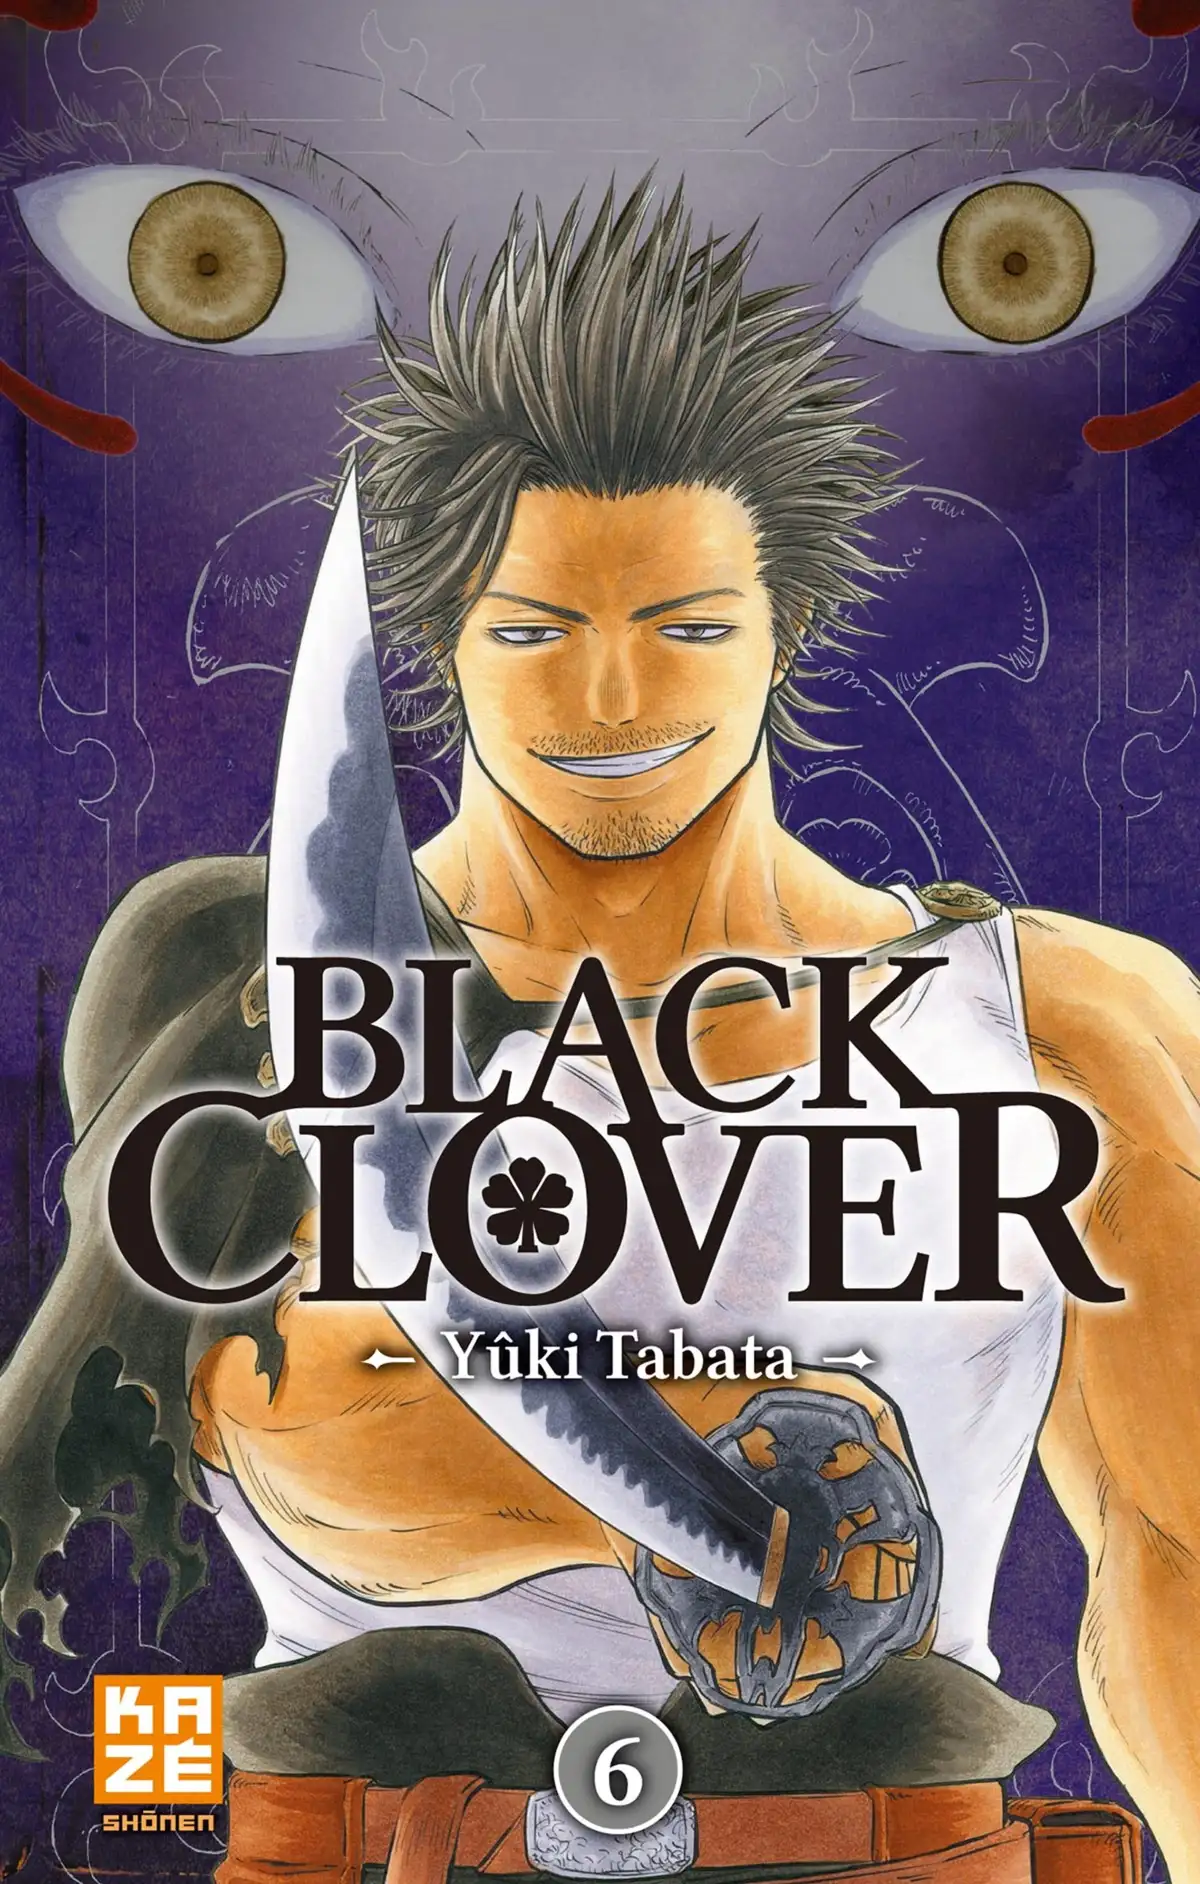 Black Clover Volume 6 page 1